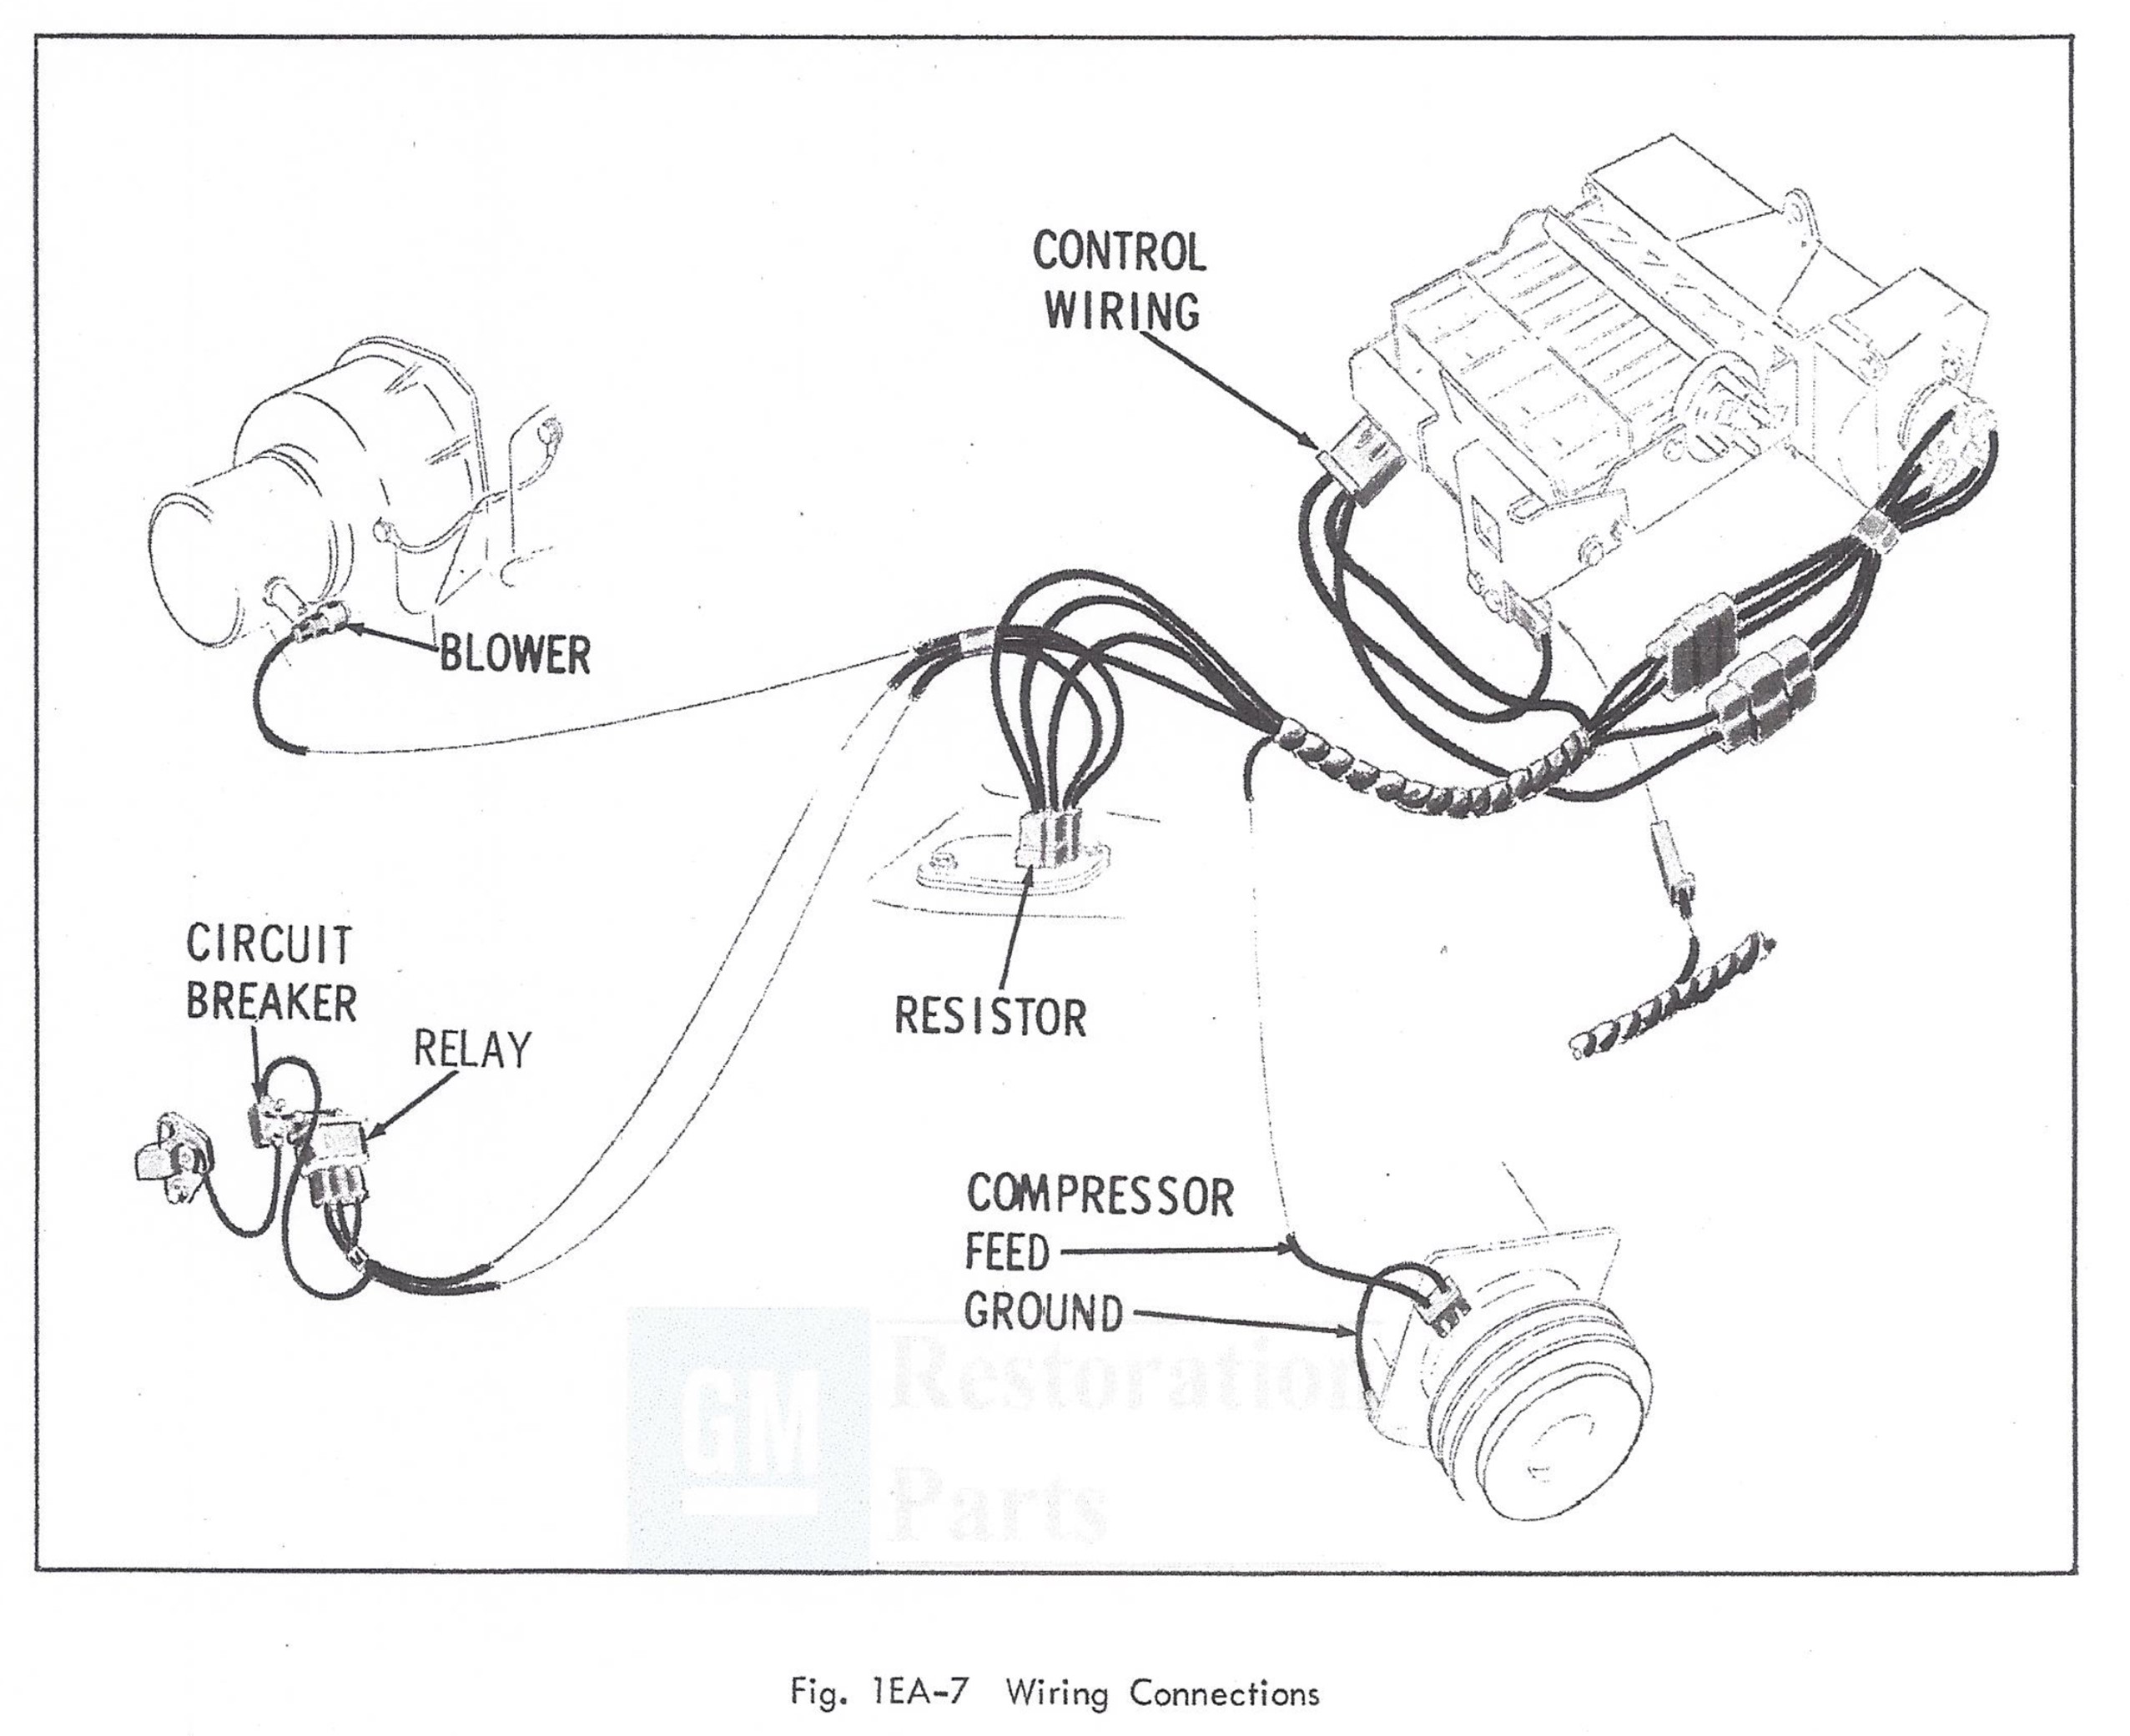 Toronado Custom A-C Wiring Picture.jpg